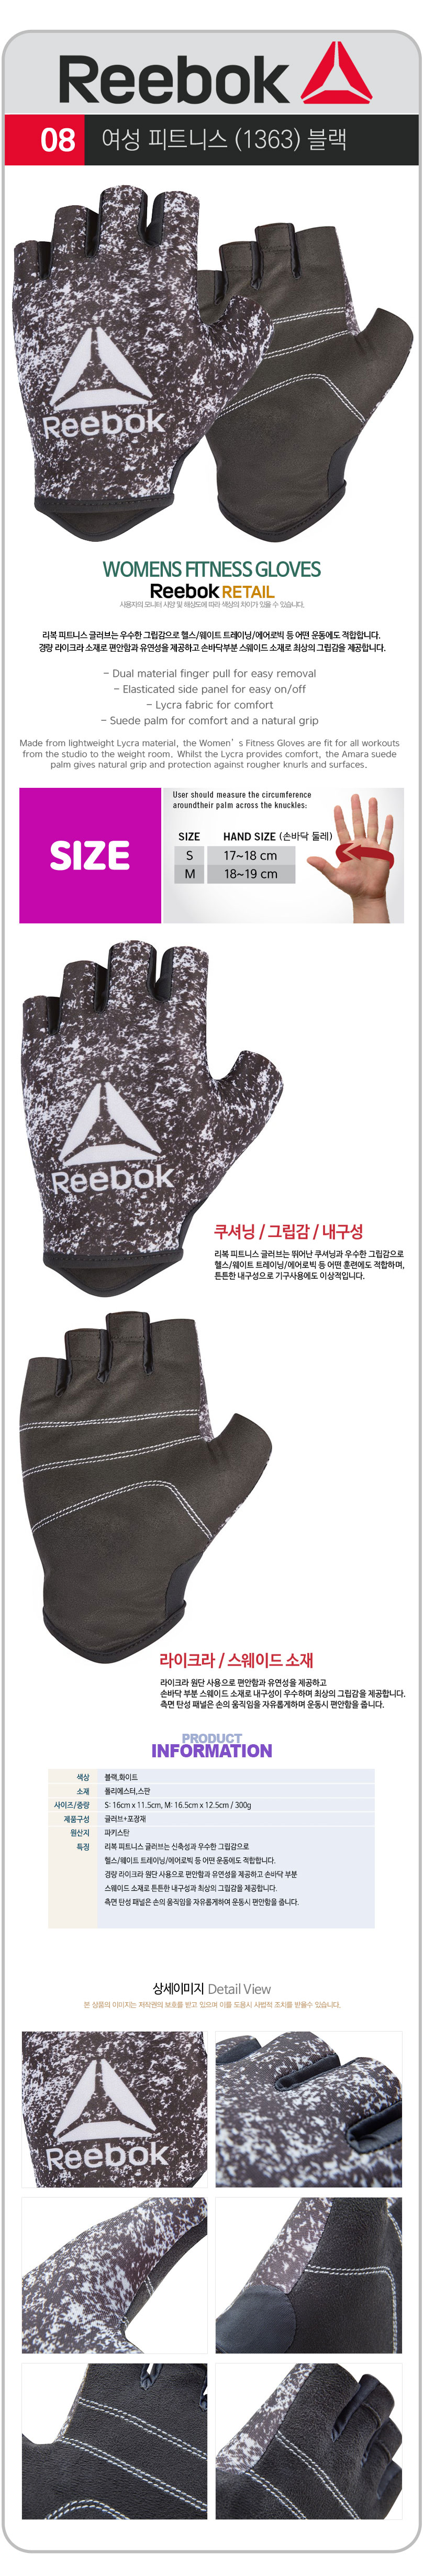 reebok studio gloves